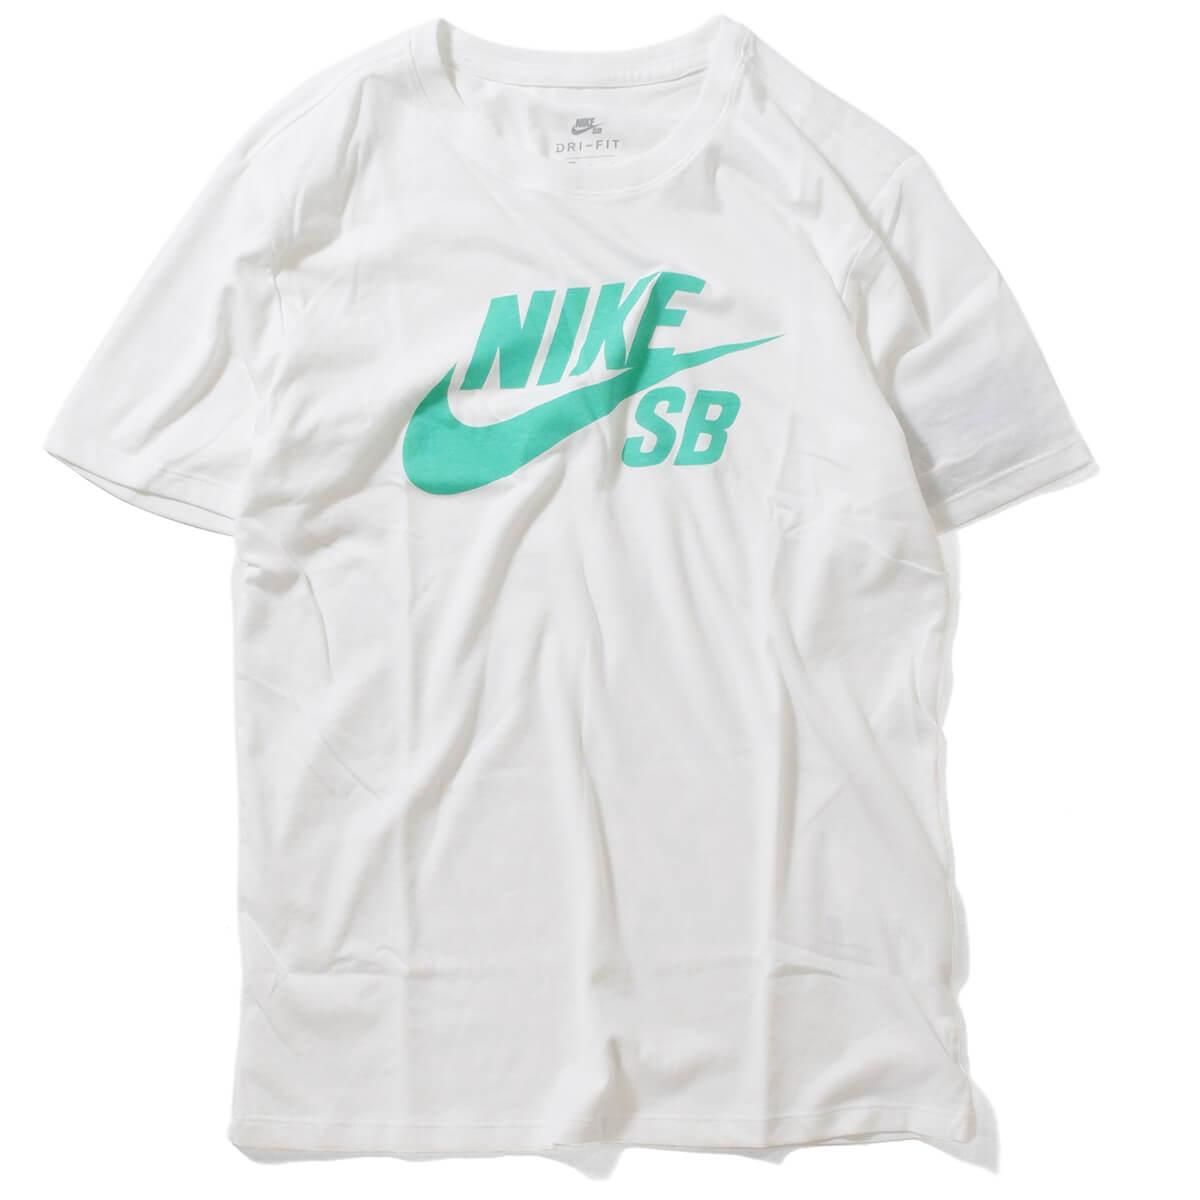 Nike SB Clothing Logo - Lafayette: Kie Ney's B Nike SB dry fitting logo T-shirt DRI-FIT LOGO ...